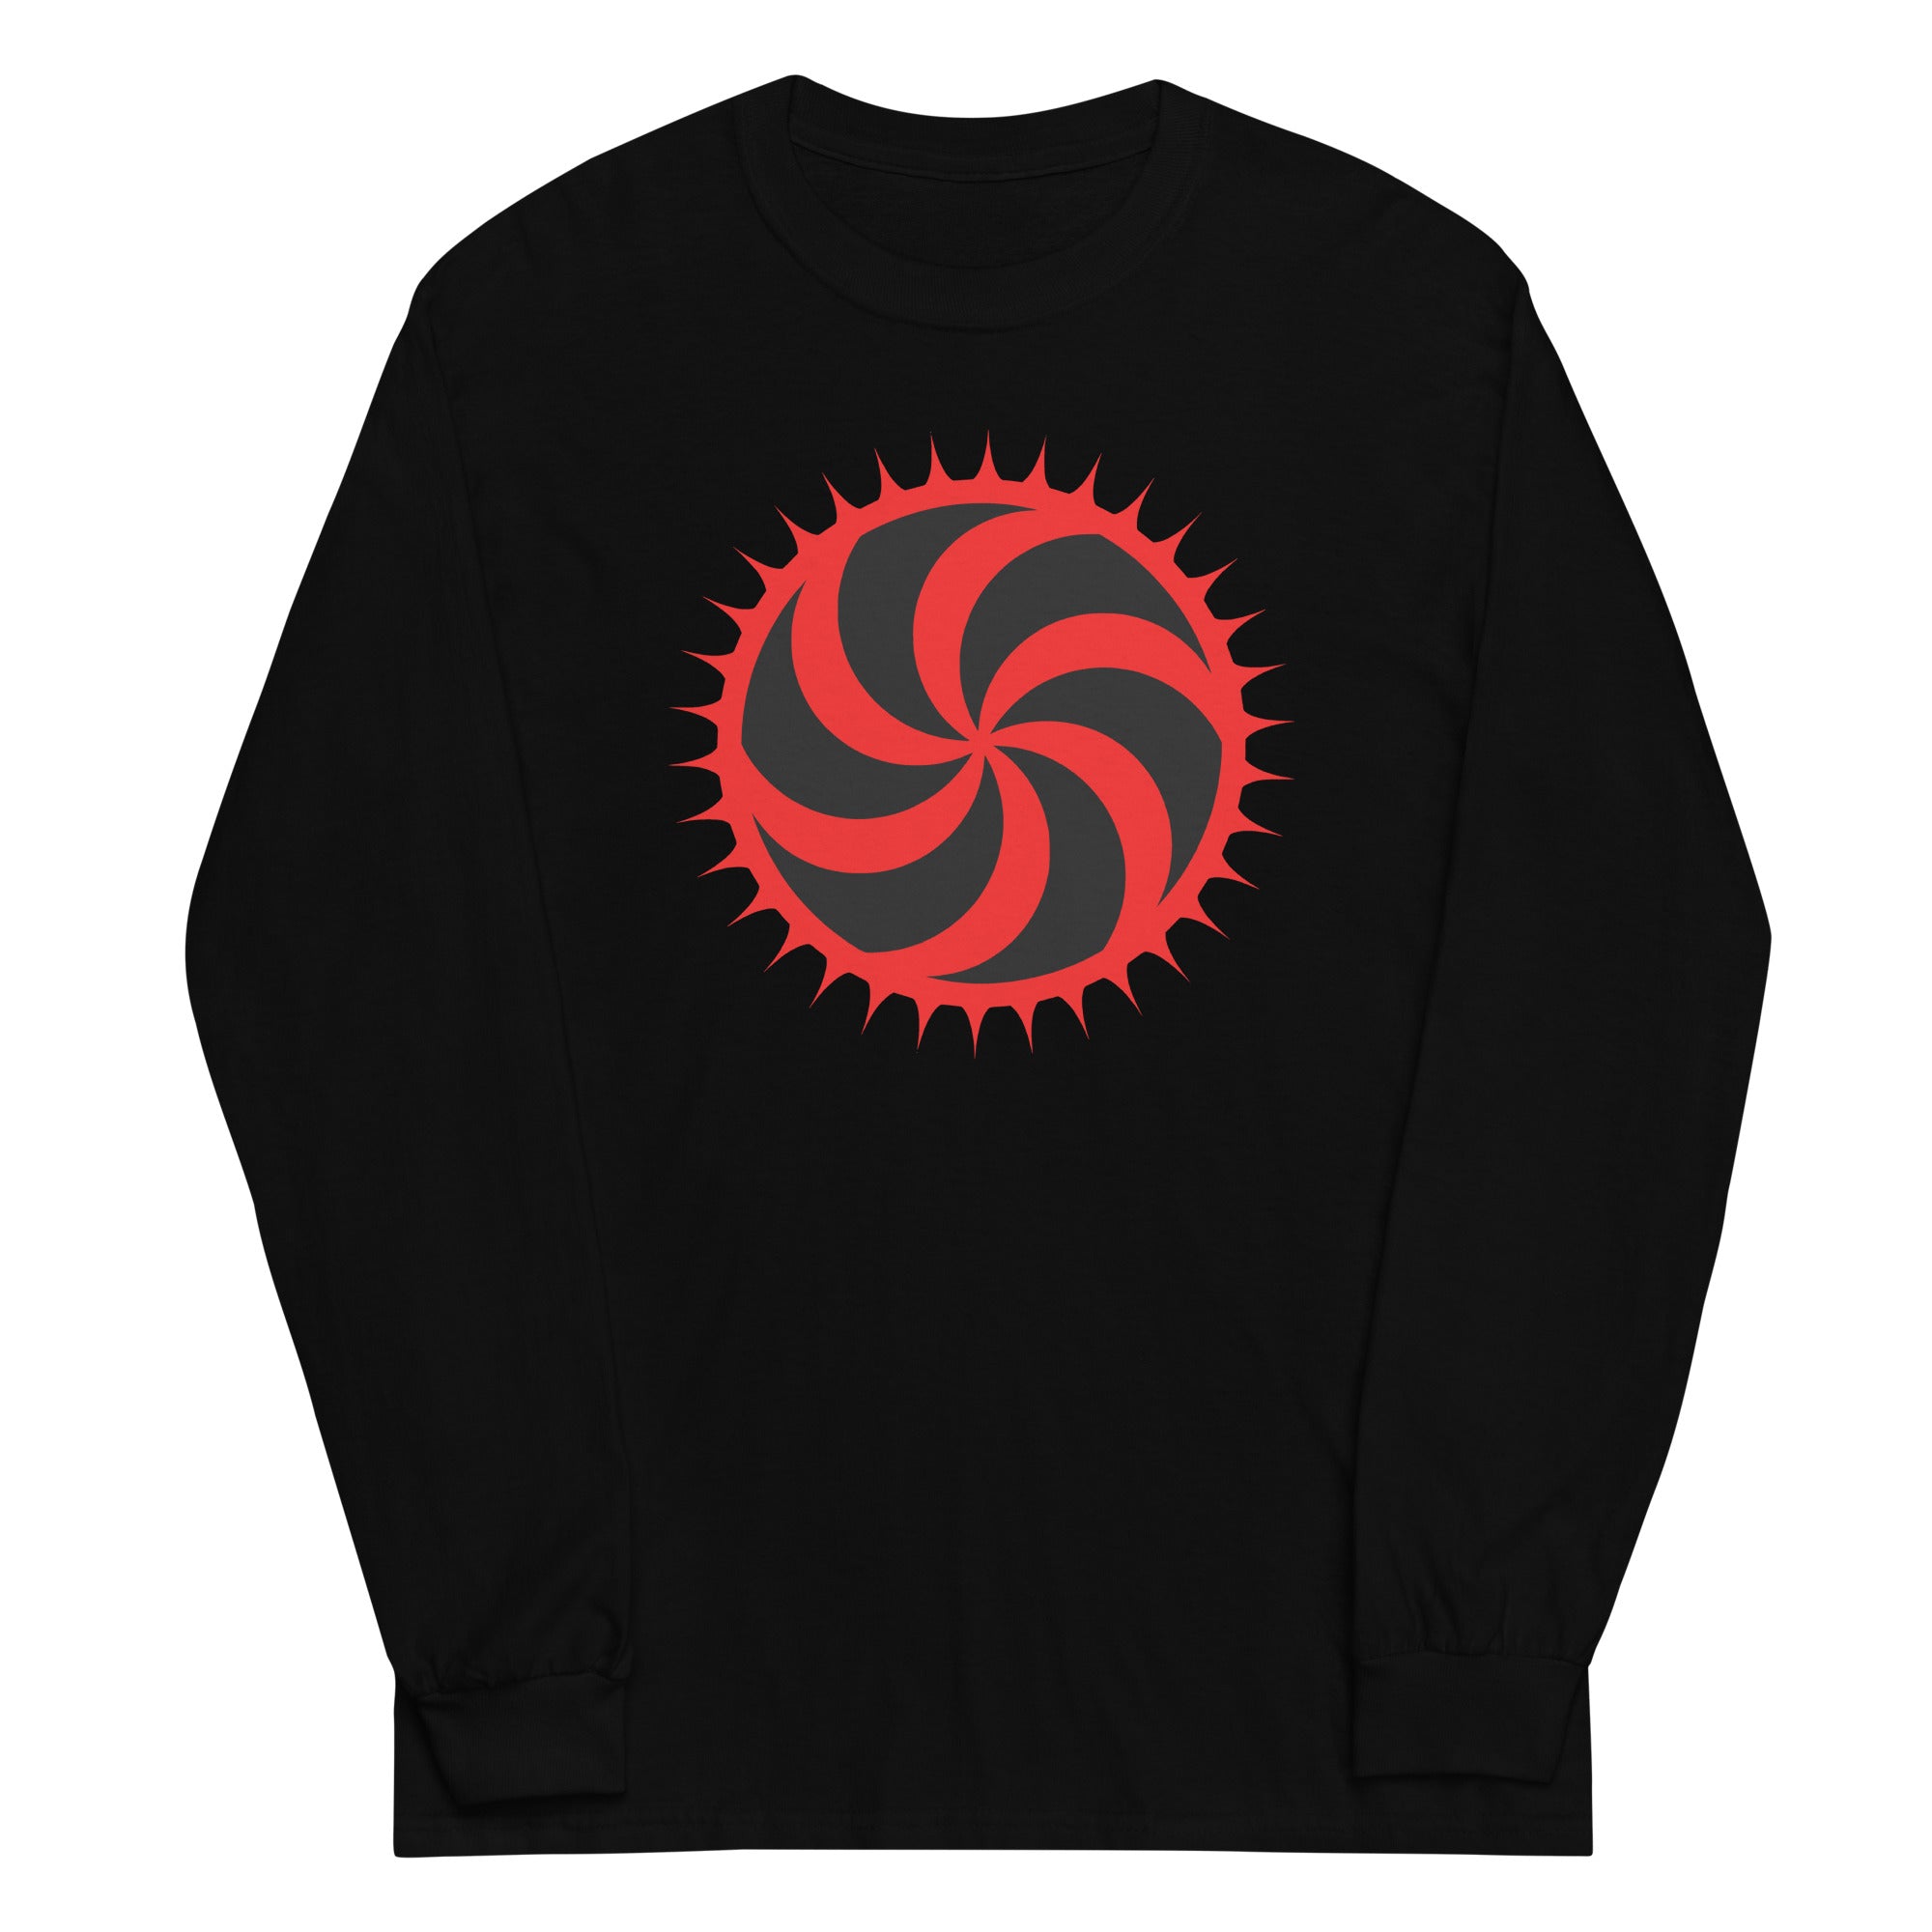 Red Deadly Swirl Spike Alchemy Symbol Long Sleeve Shirt